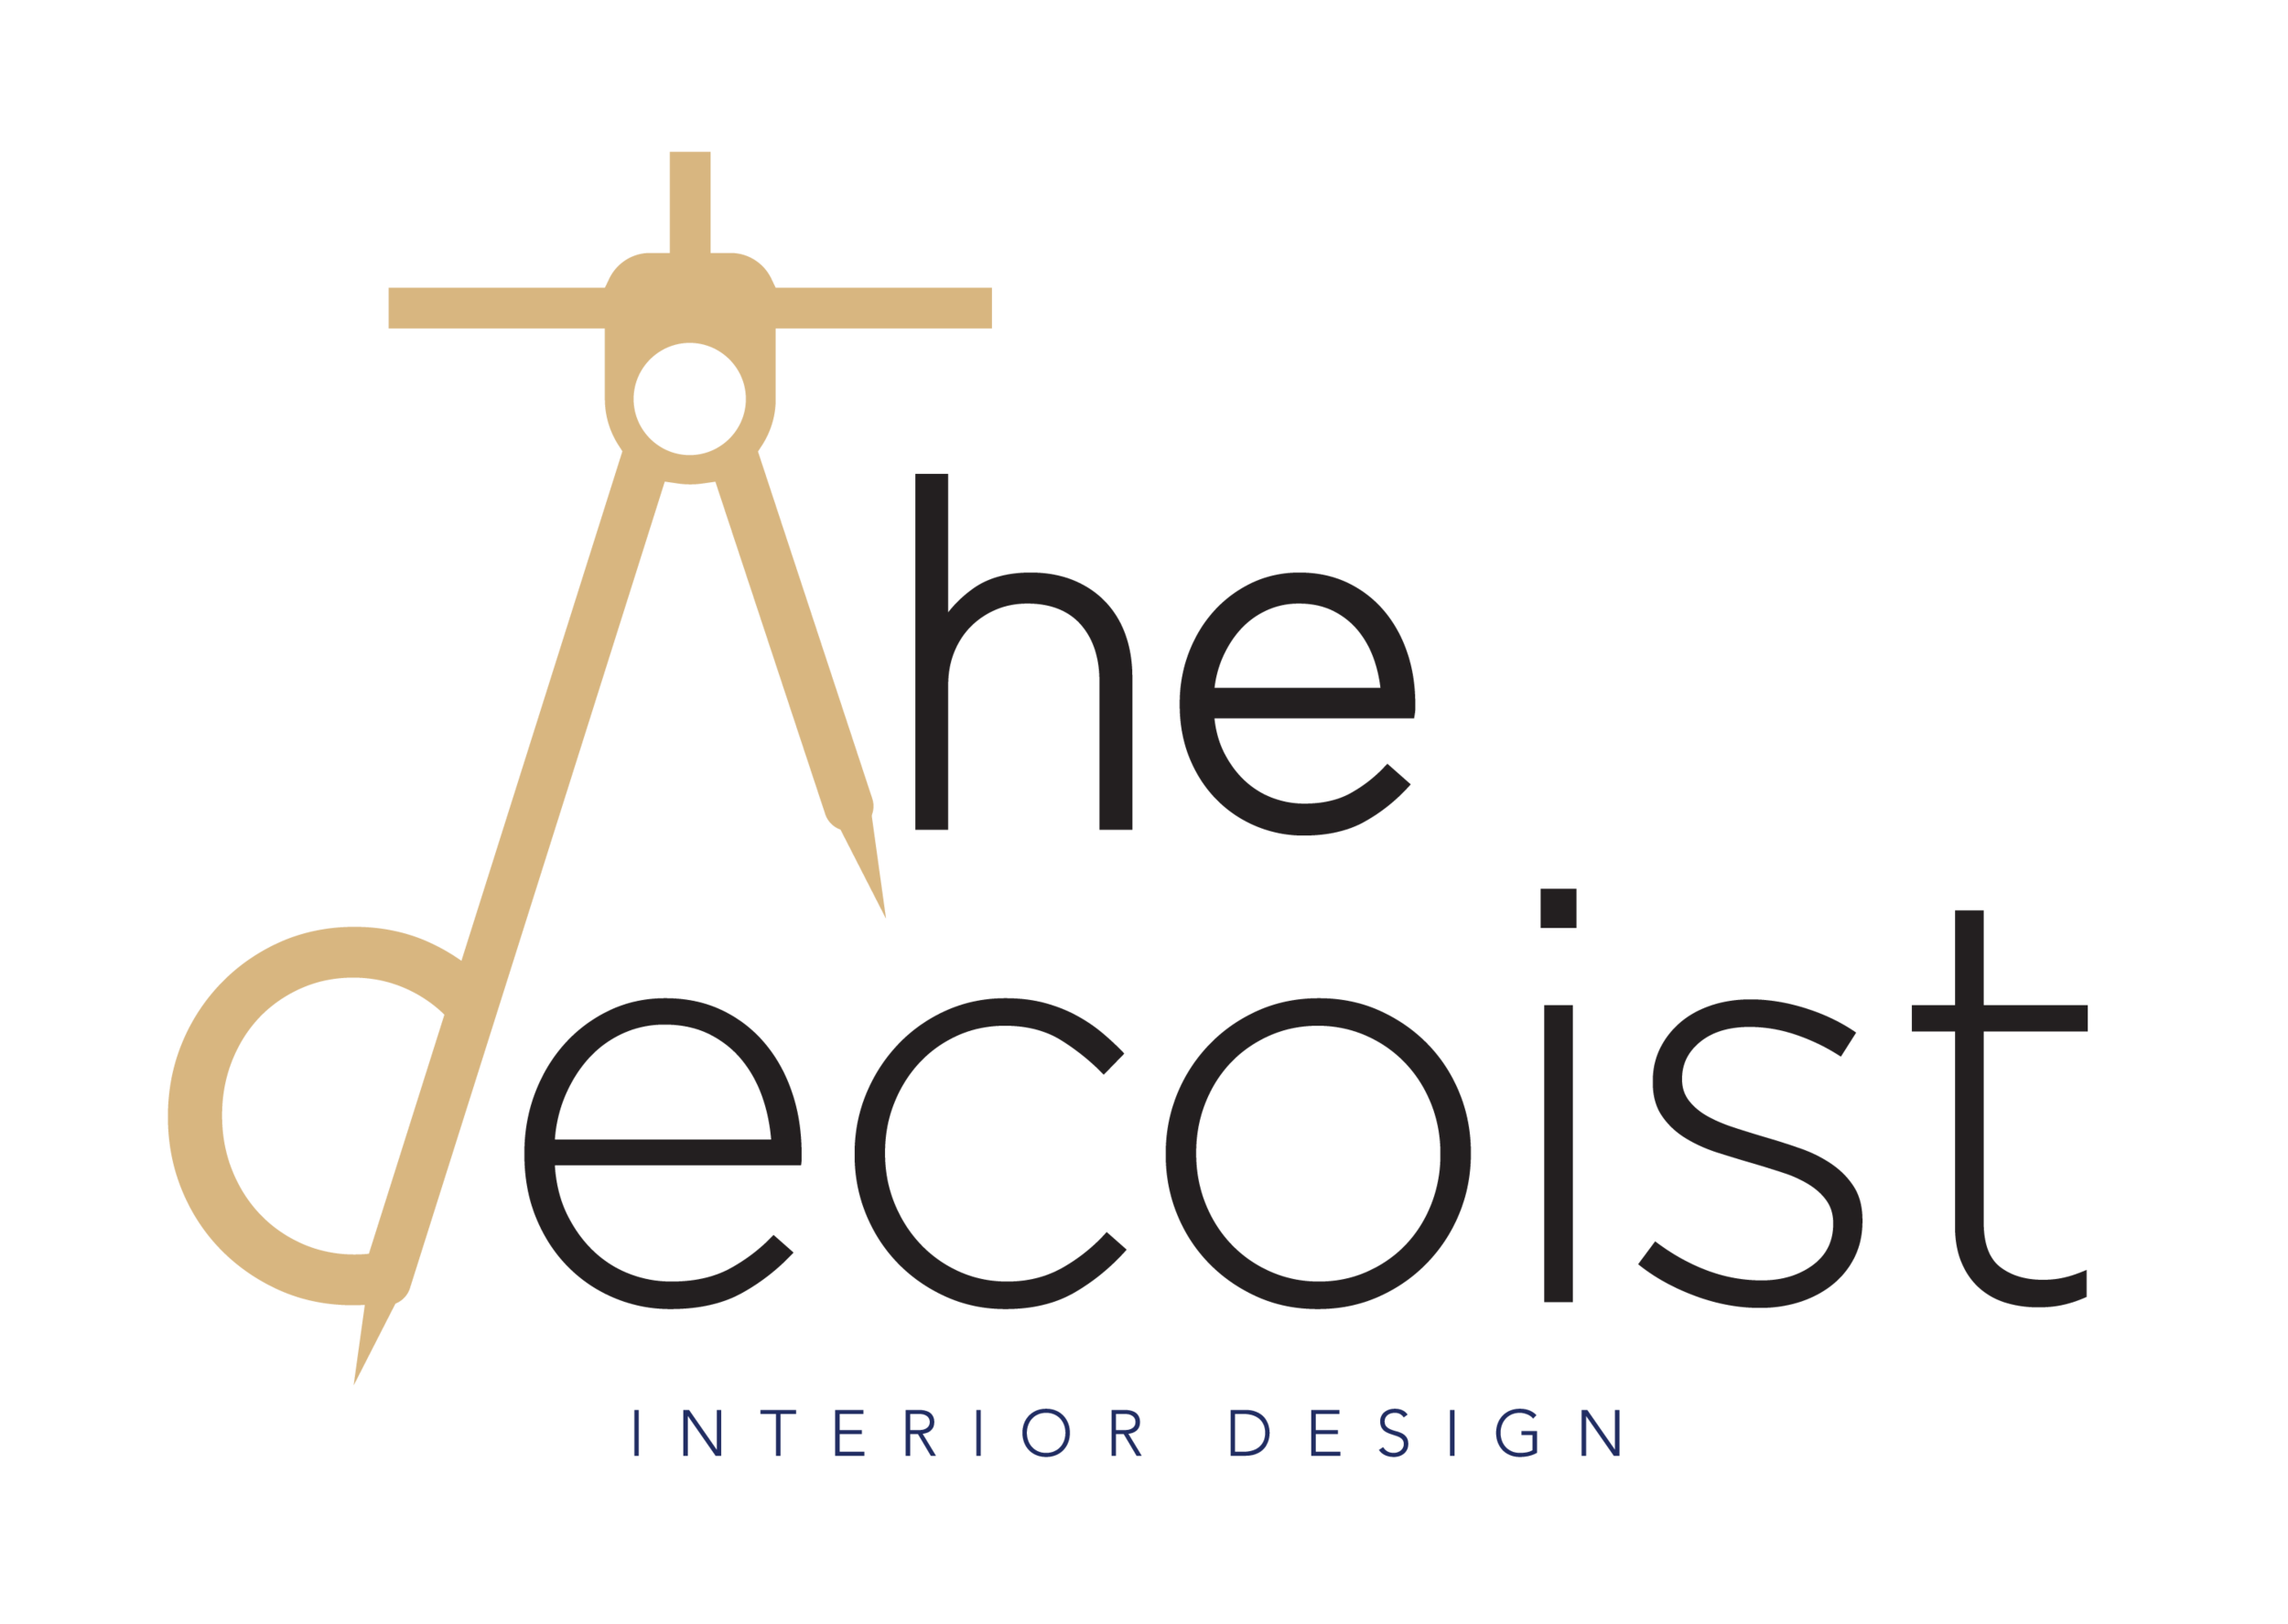 Logo-The-Decoist-01.png